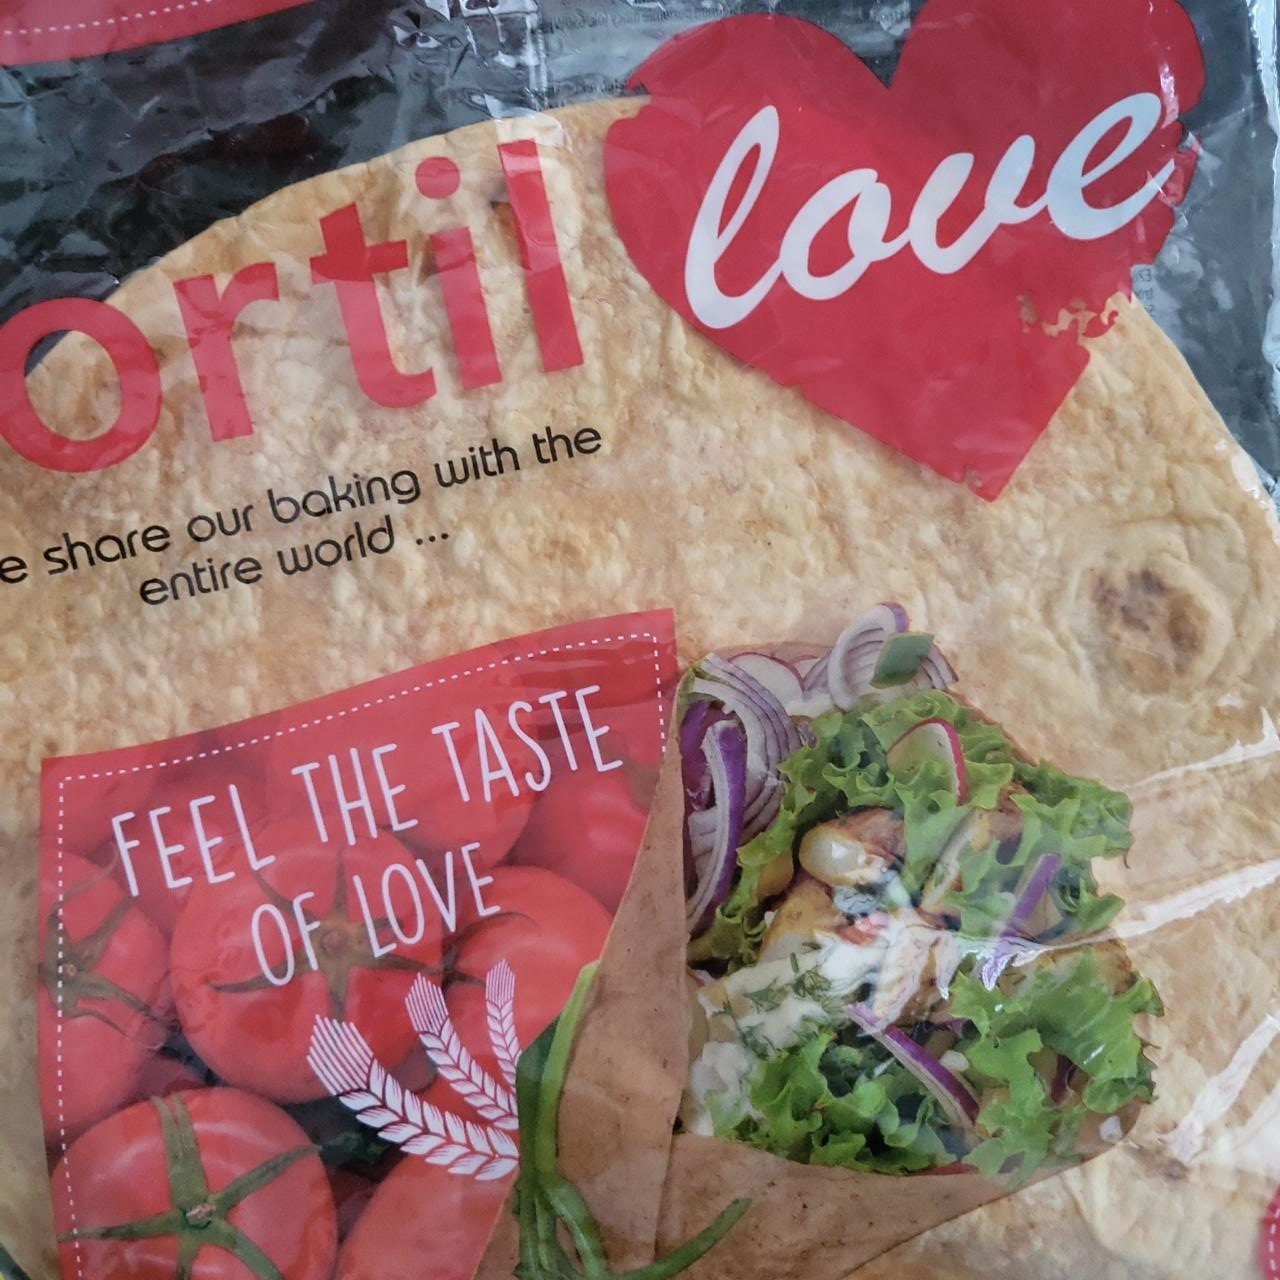 Képek - Paradicsomos tortillalapok búzalisztből Auchan